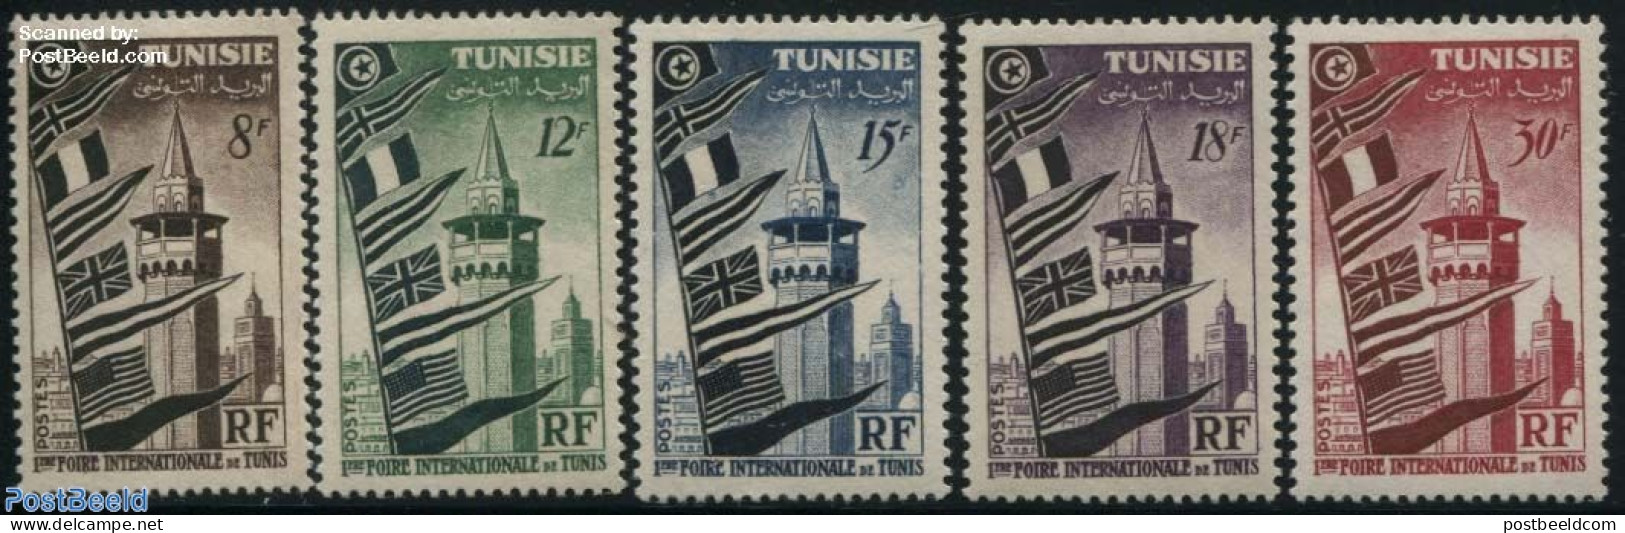 Tunisia 1953 International Fair Tunis 5v, Mint NH, History - Various - Flags - Export & Trade - Fábricas Y Industrias